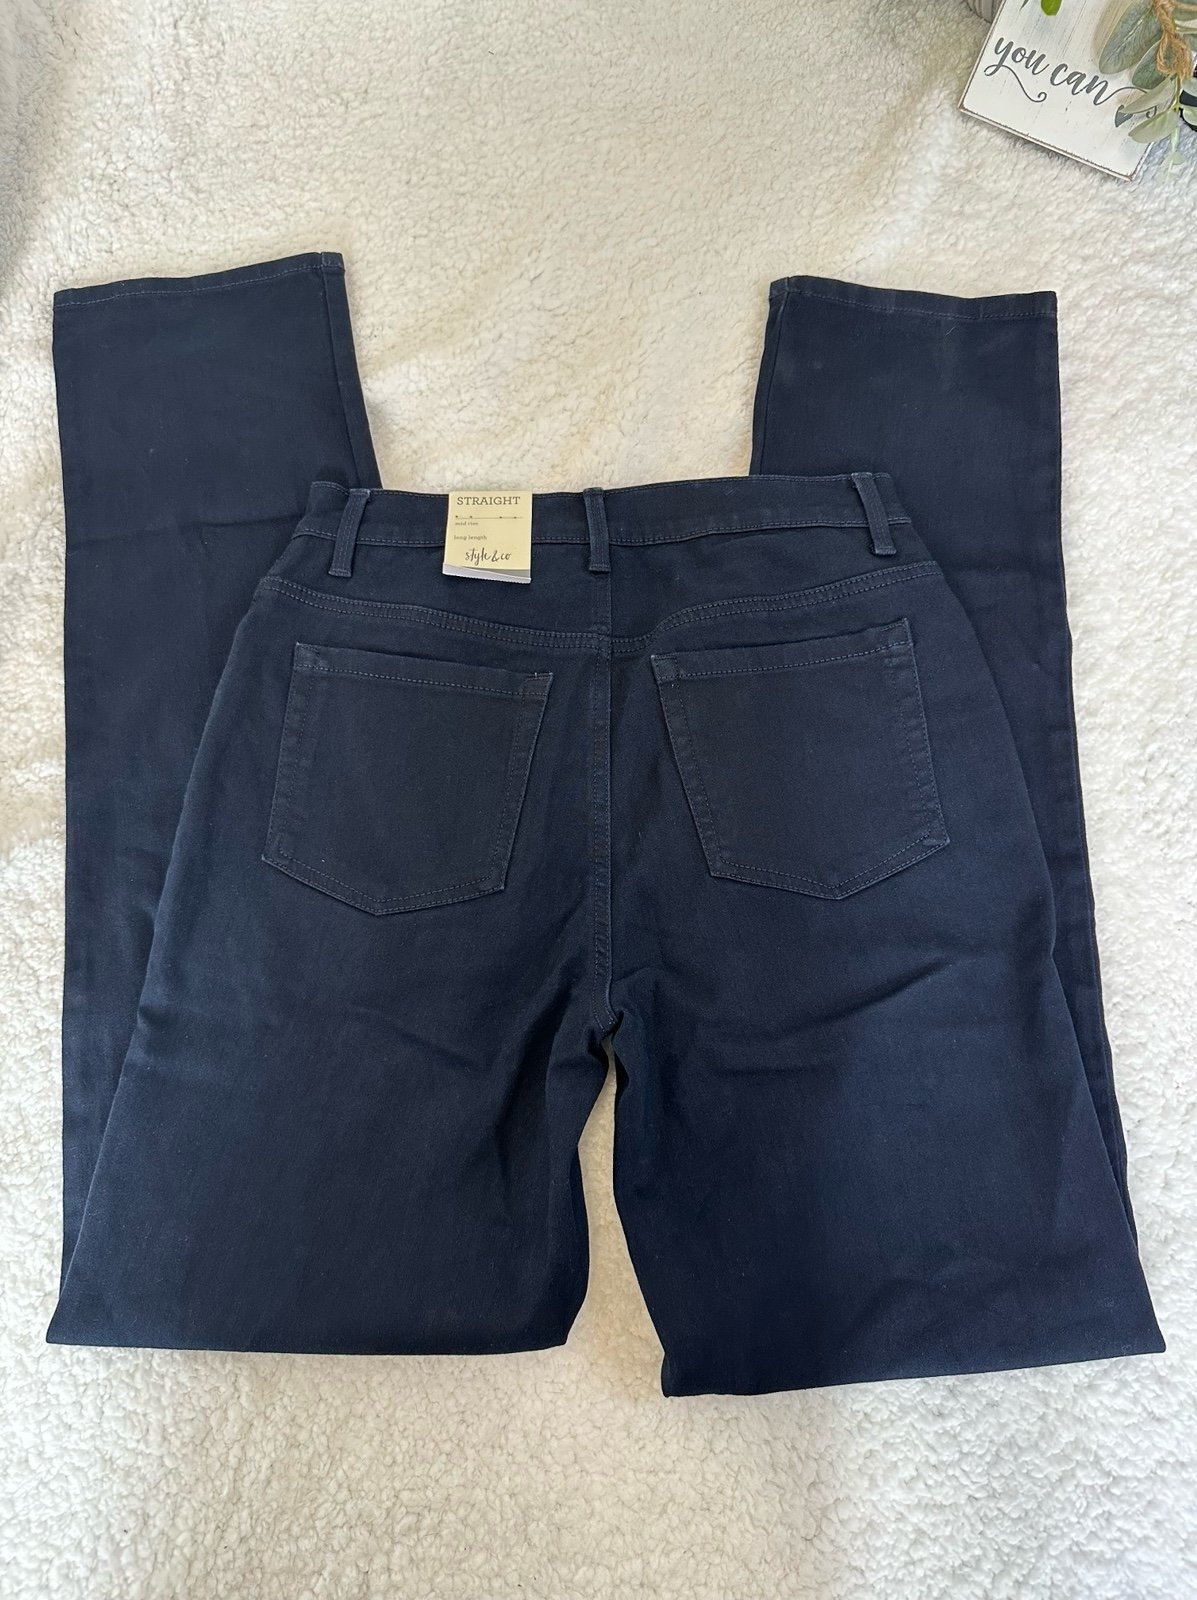 Wholesale price NWT. Women’s straight leg mid rise pants. Size 8 Long. J20yZlT55 New Style